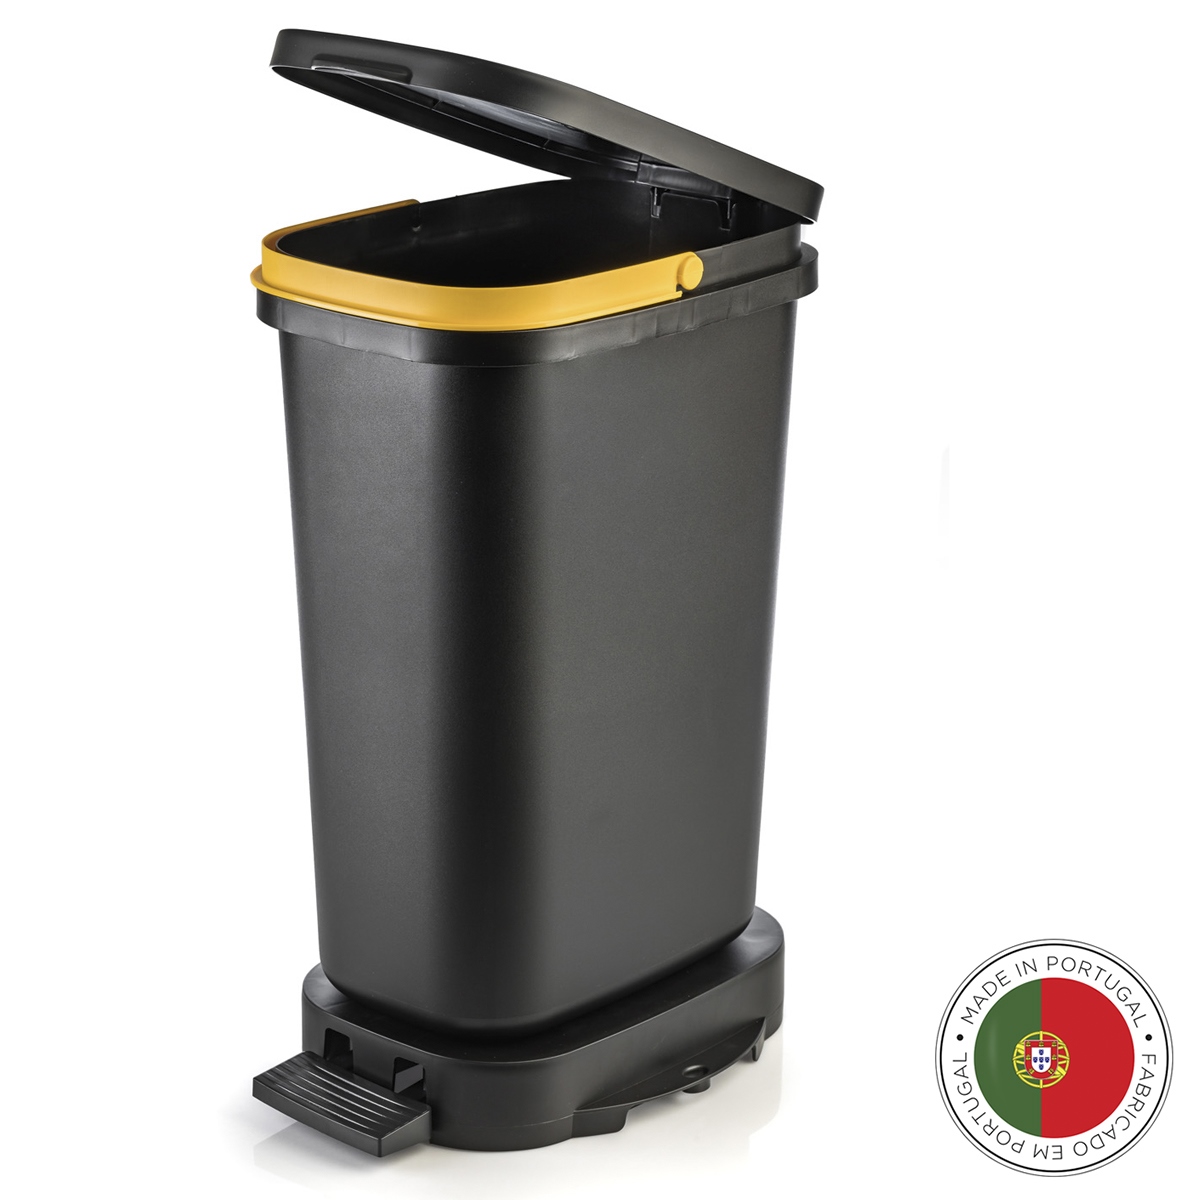 Мусорный бак с педалью BE-ECO black yellow, 26х36 см, 50 см, 20 л, Пластик, Faplana, Португалия